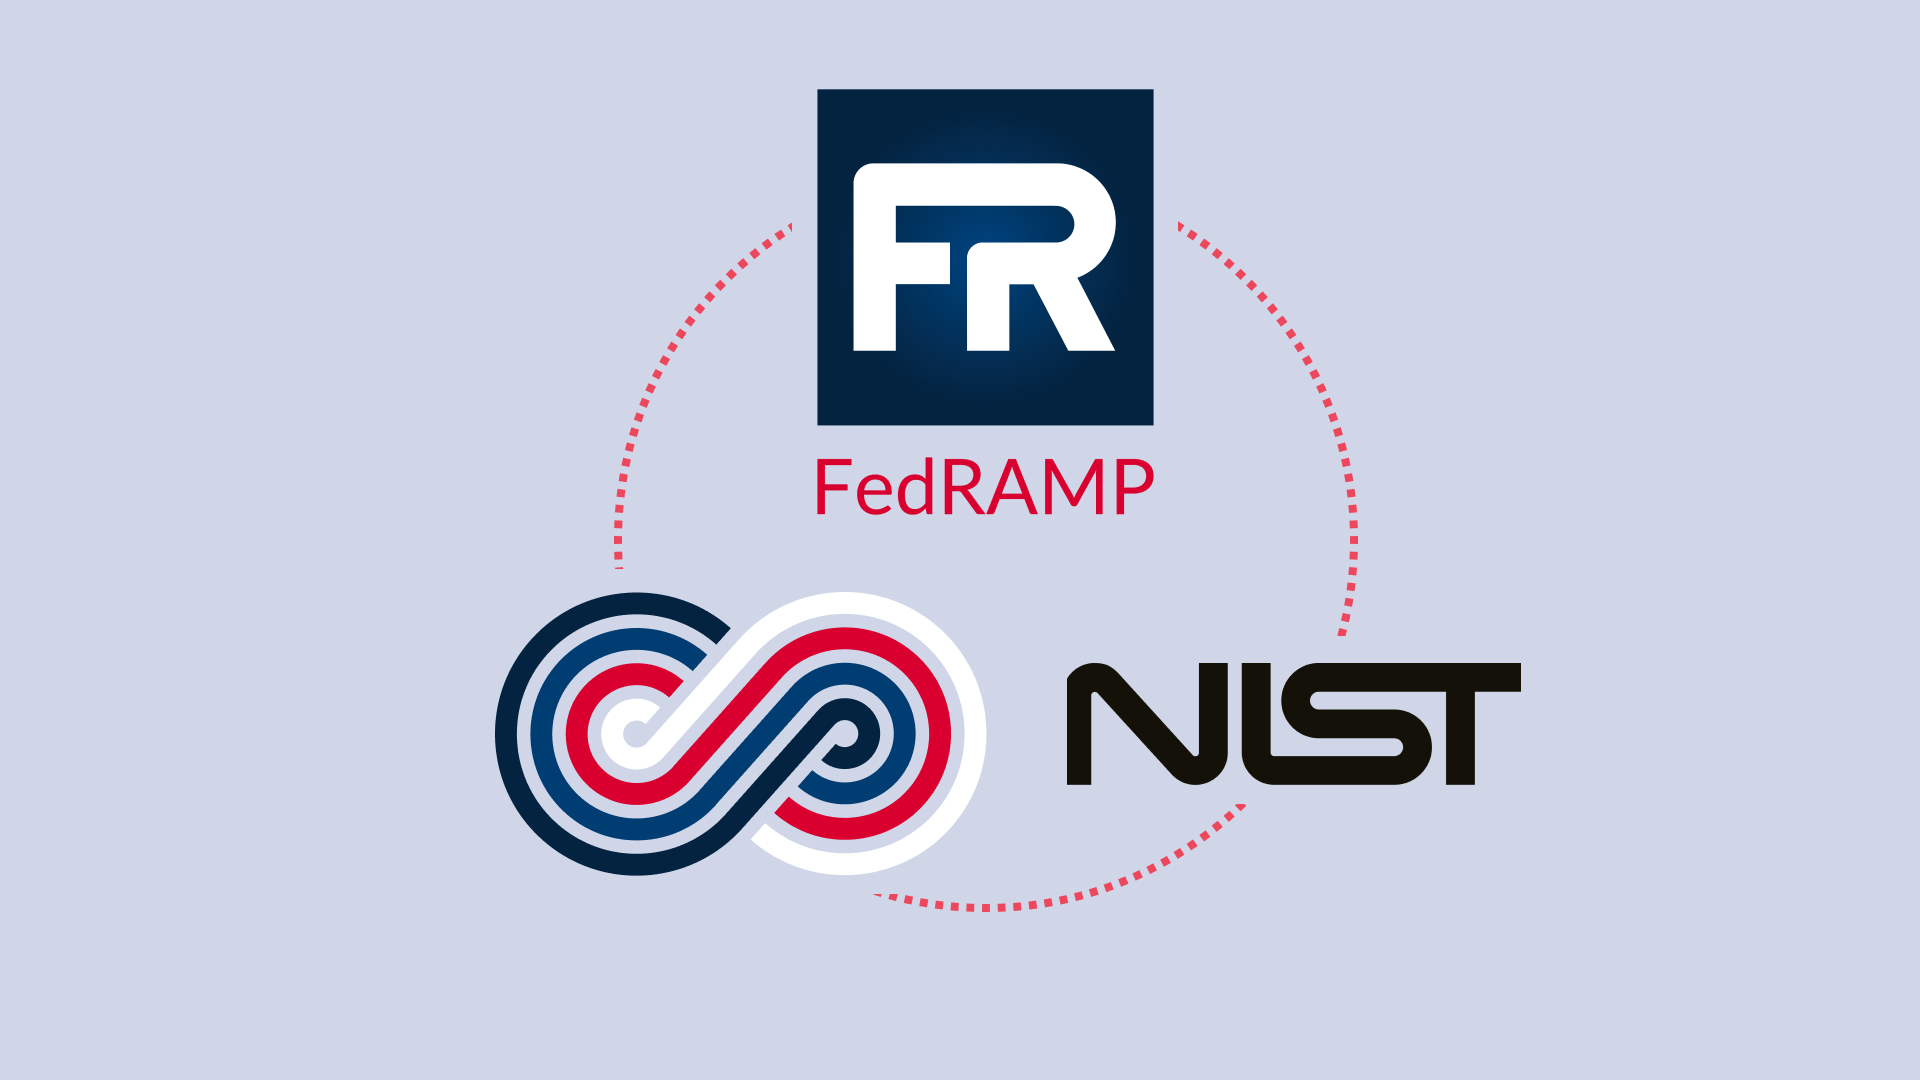 fedramp and nist logo kosli